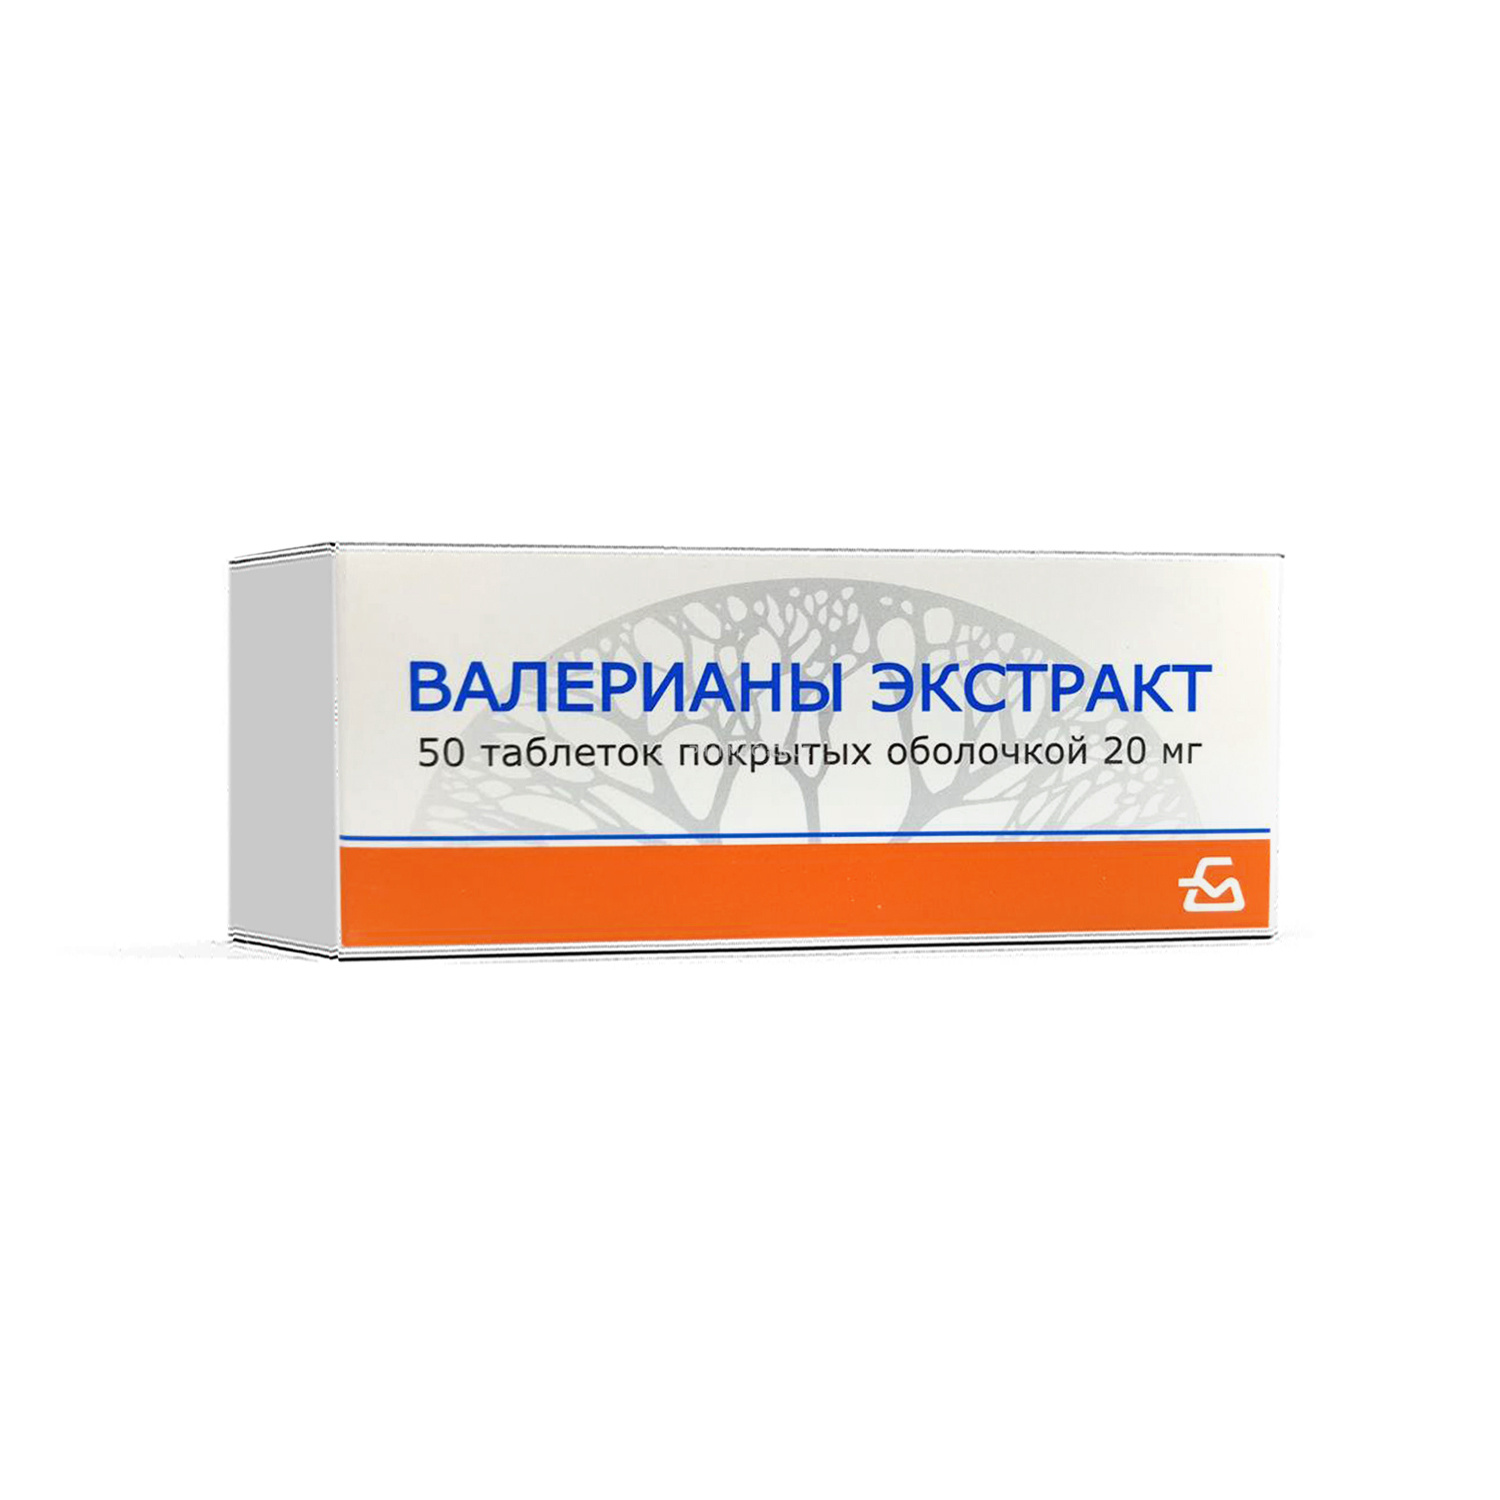 Valeriani ekstrakt tab. 20 mg №50 (Borisovskiy)